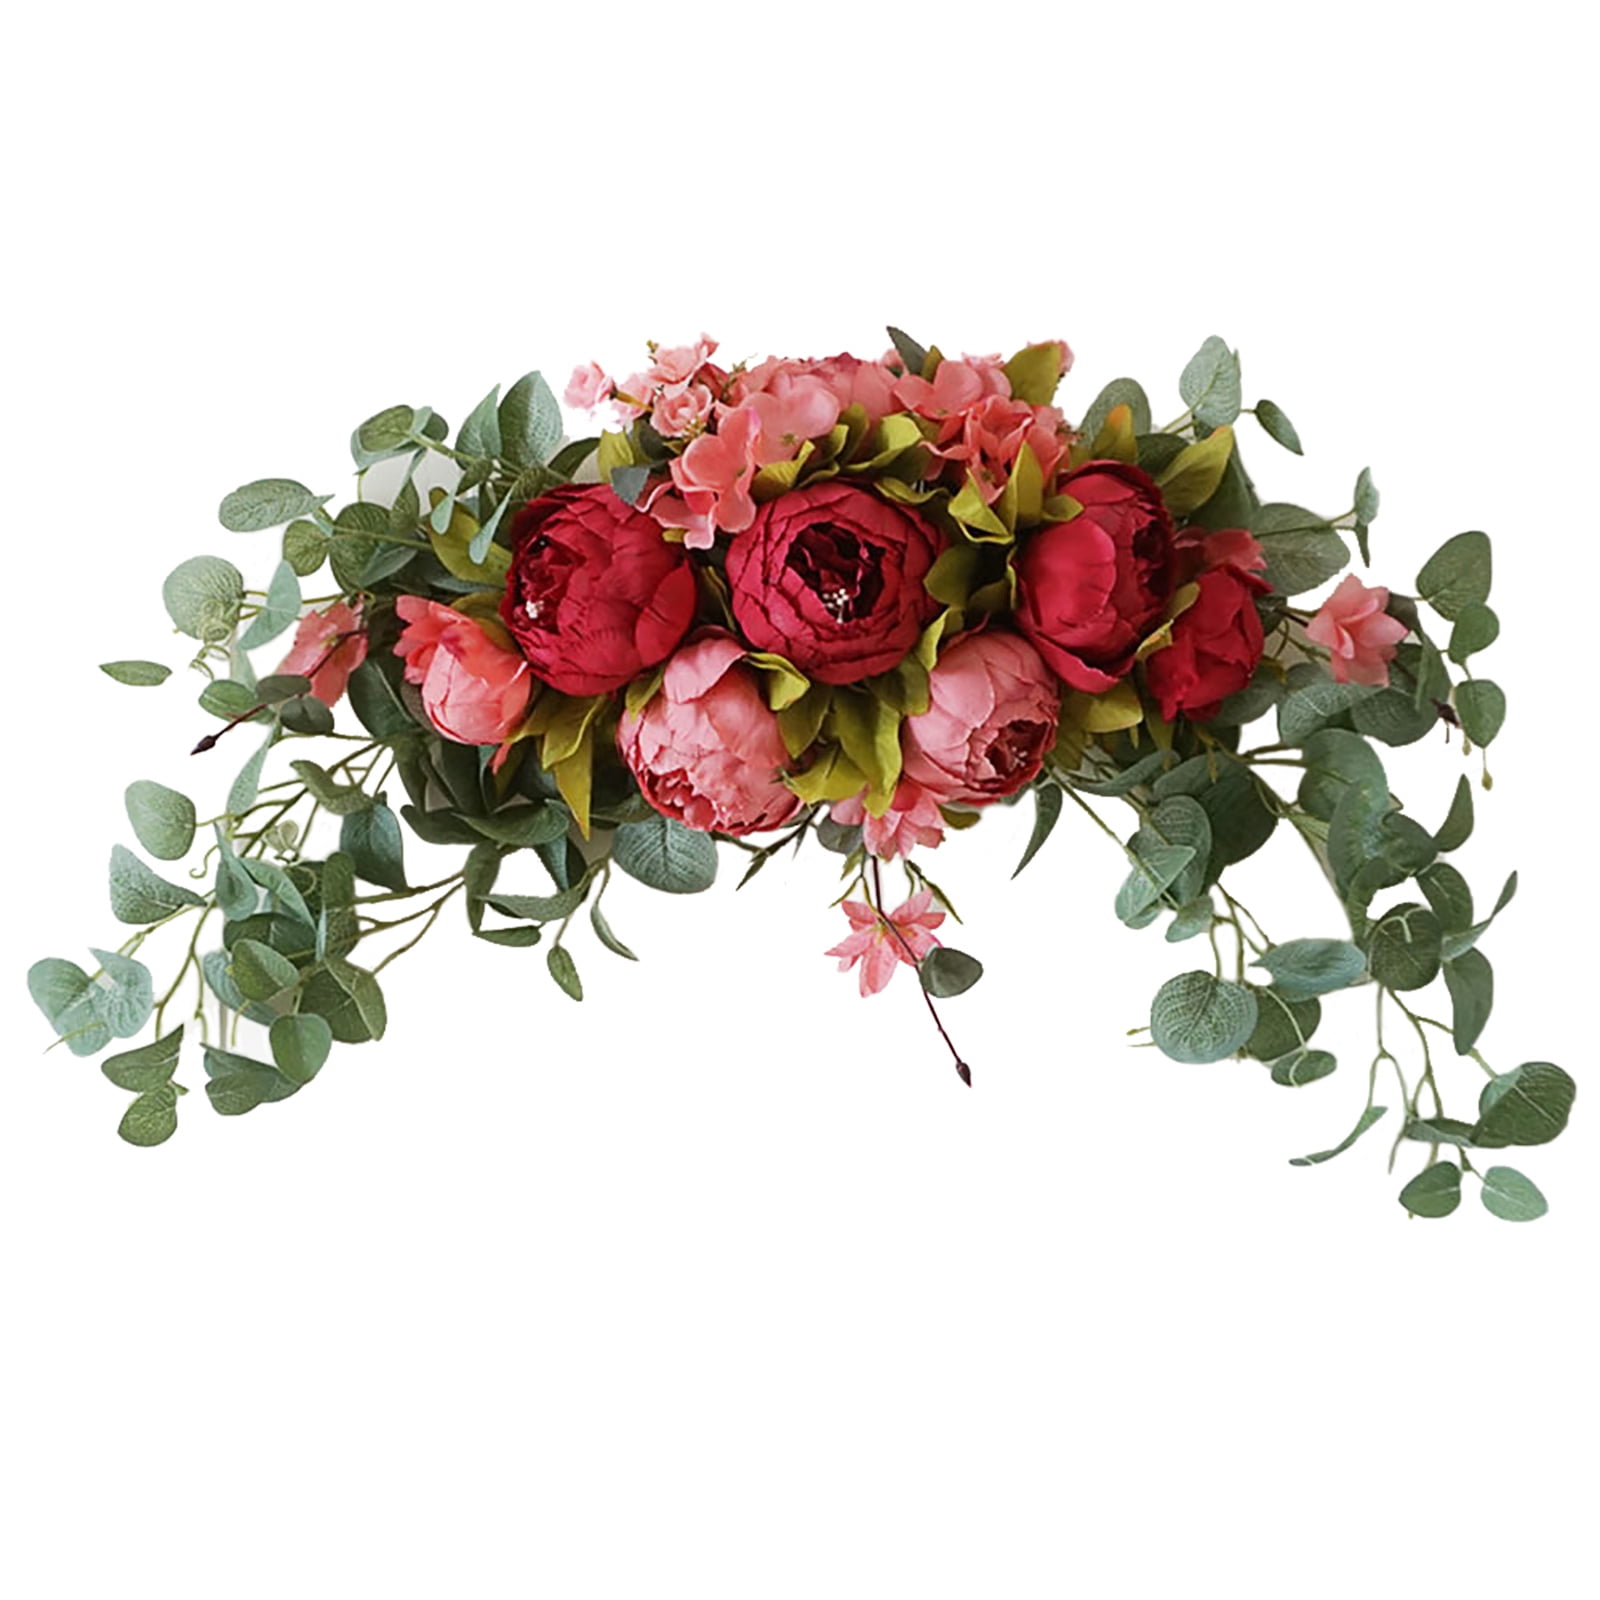 PINK SWAG Roses Hydrangea Silk Wedding Flowers Arch Gazebo Table Centerpieces 